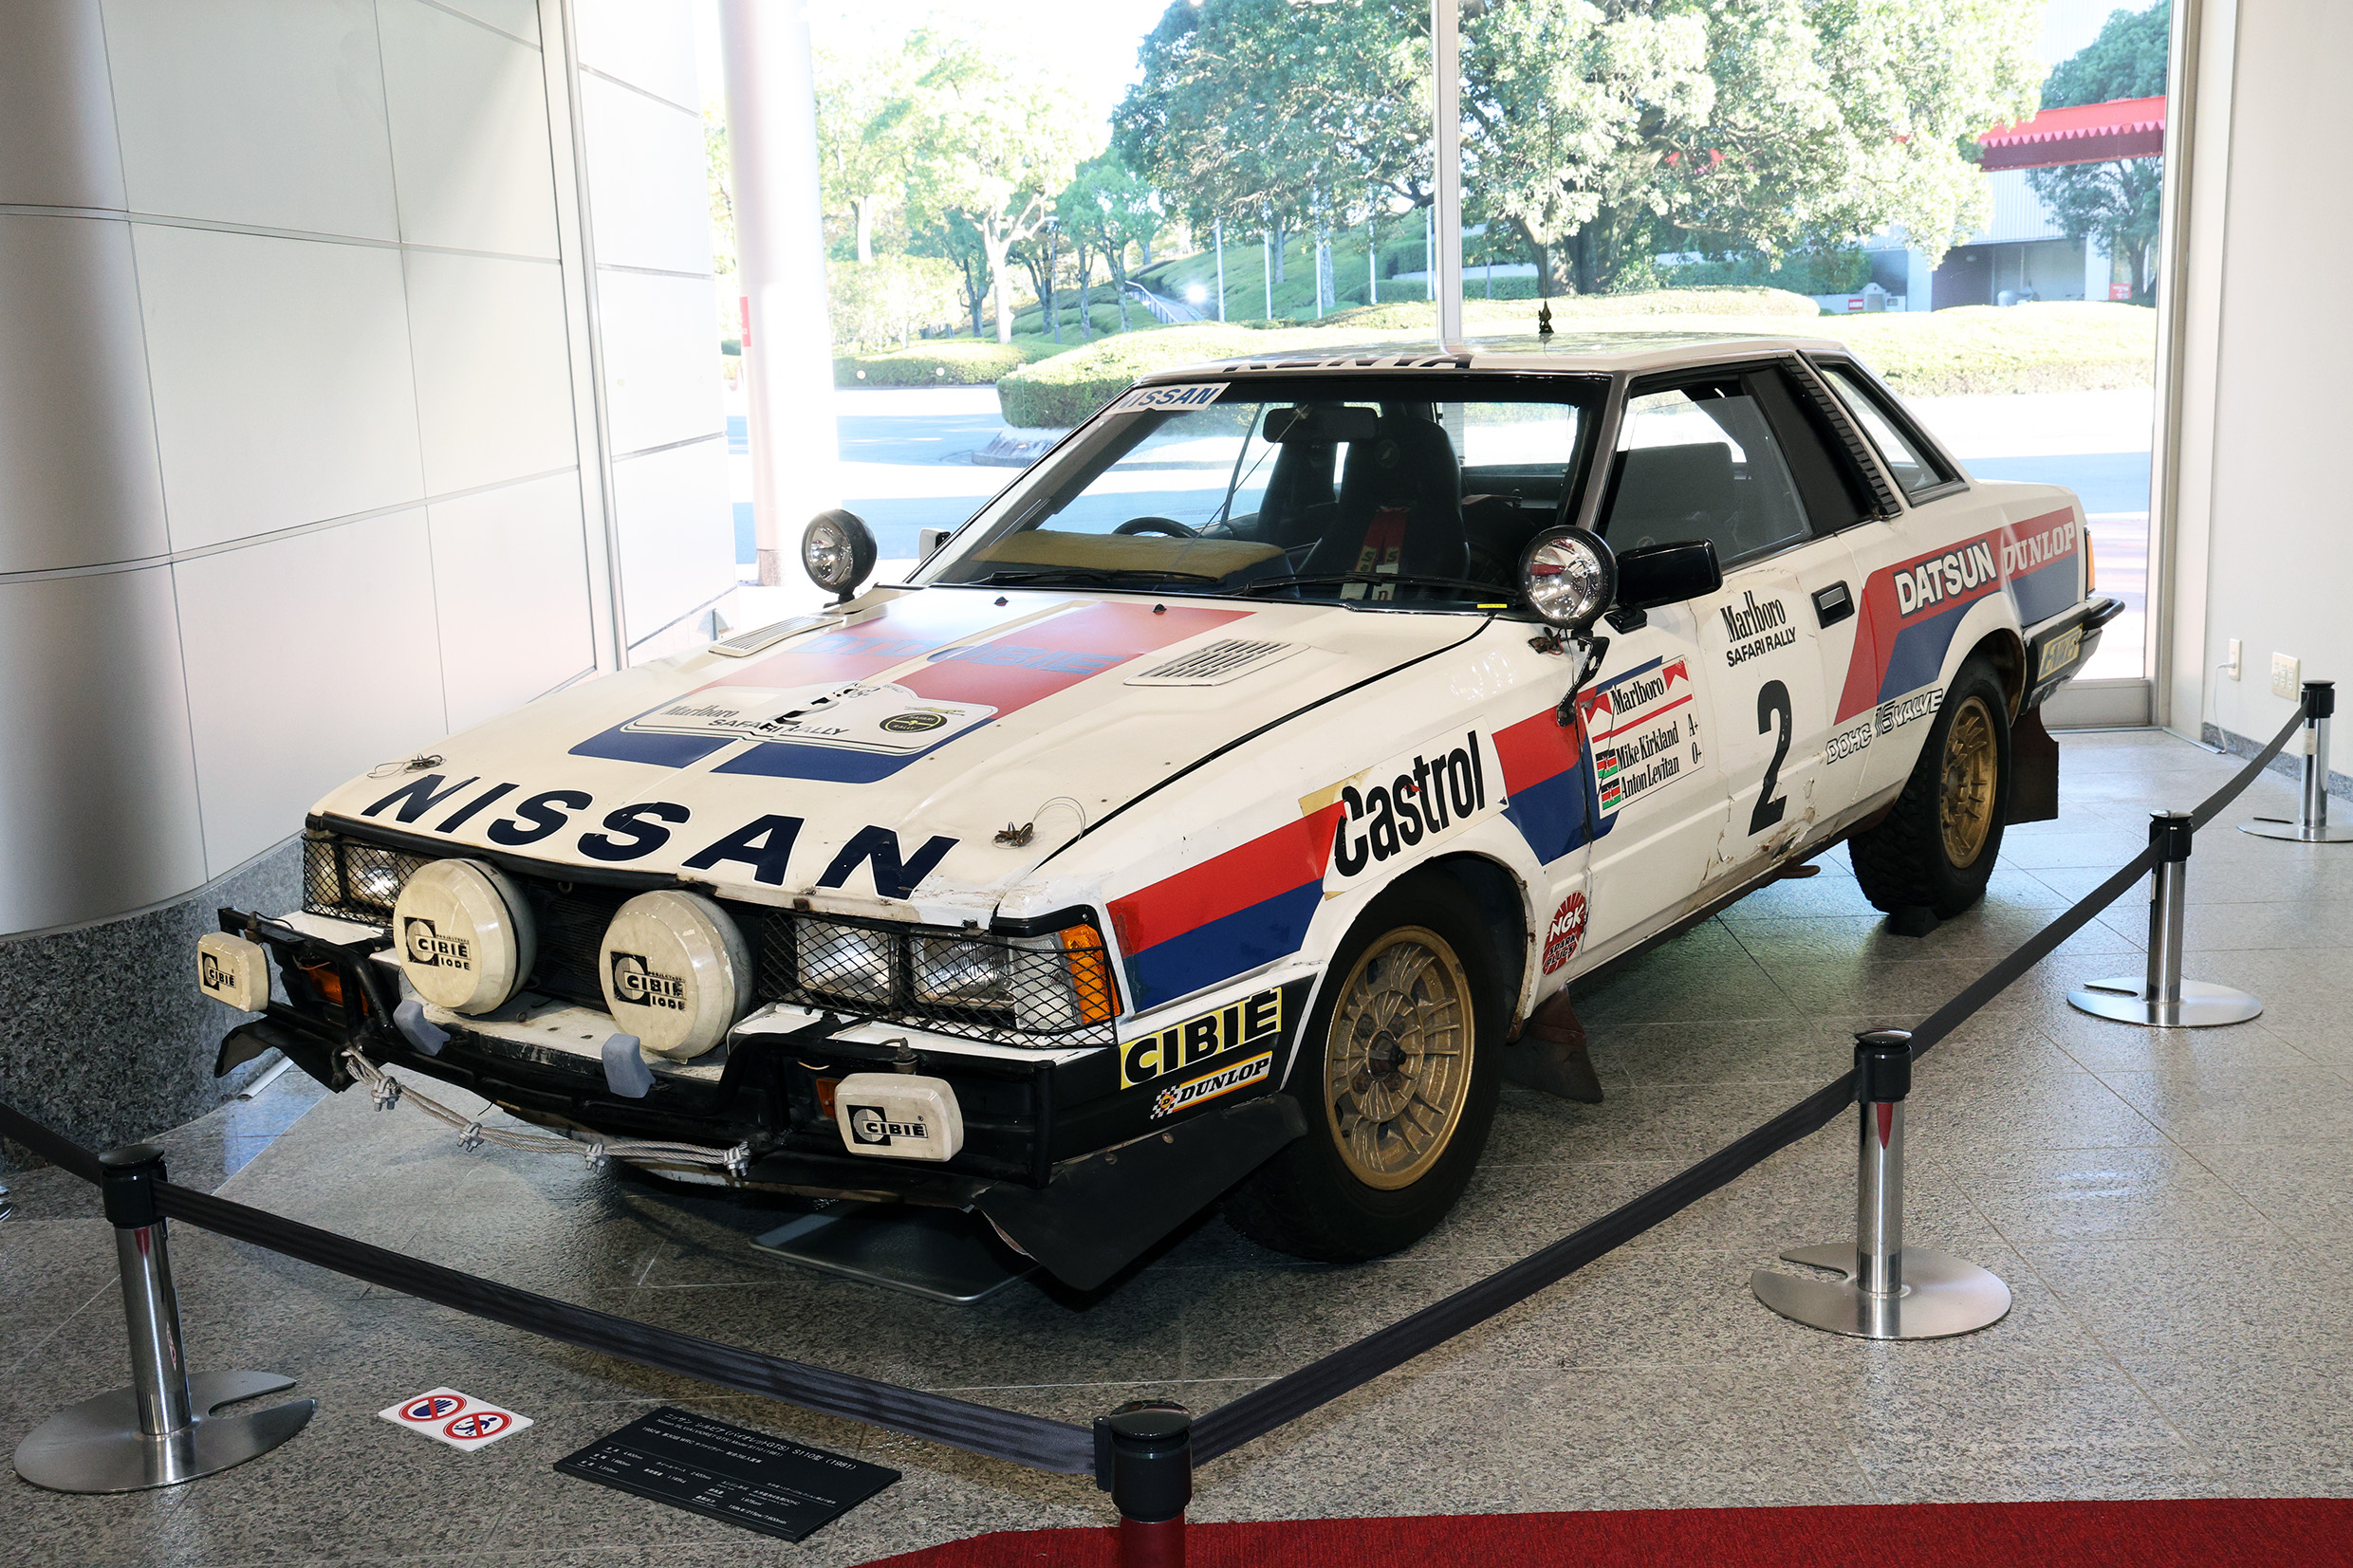 ①Nissan SILVIA（VIOLET GTS） Model S110 (1981）1982 WRC Safari Rally 3rd Award car.  (Borrowed from Nissan Heritage Collection)